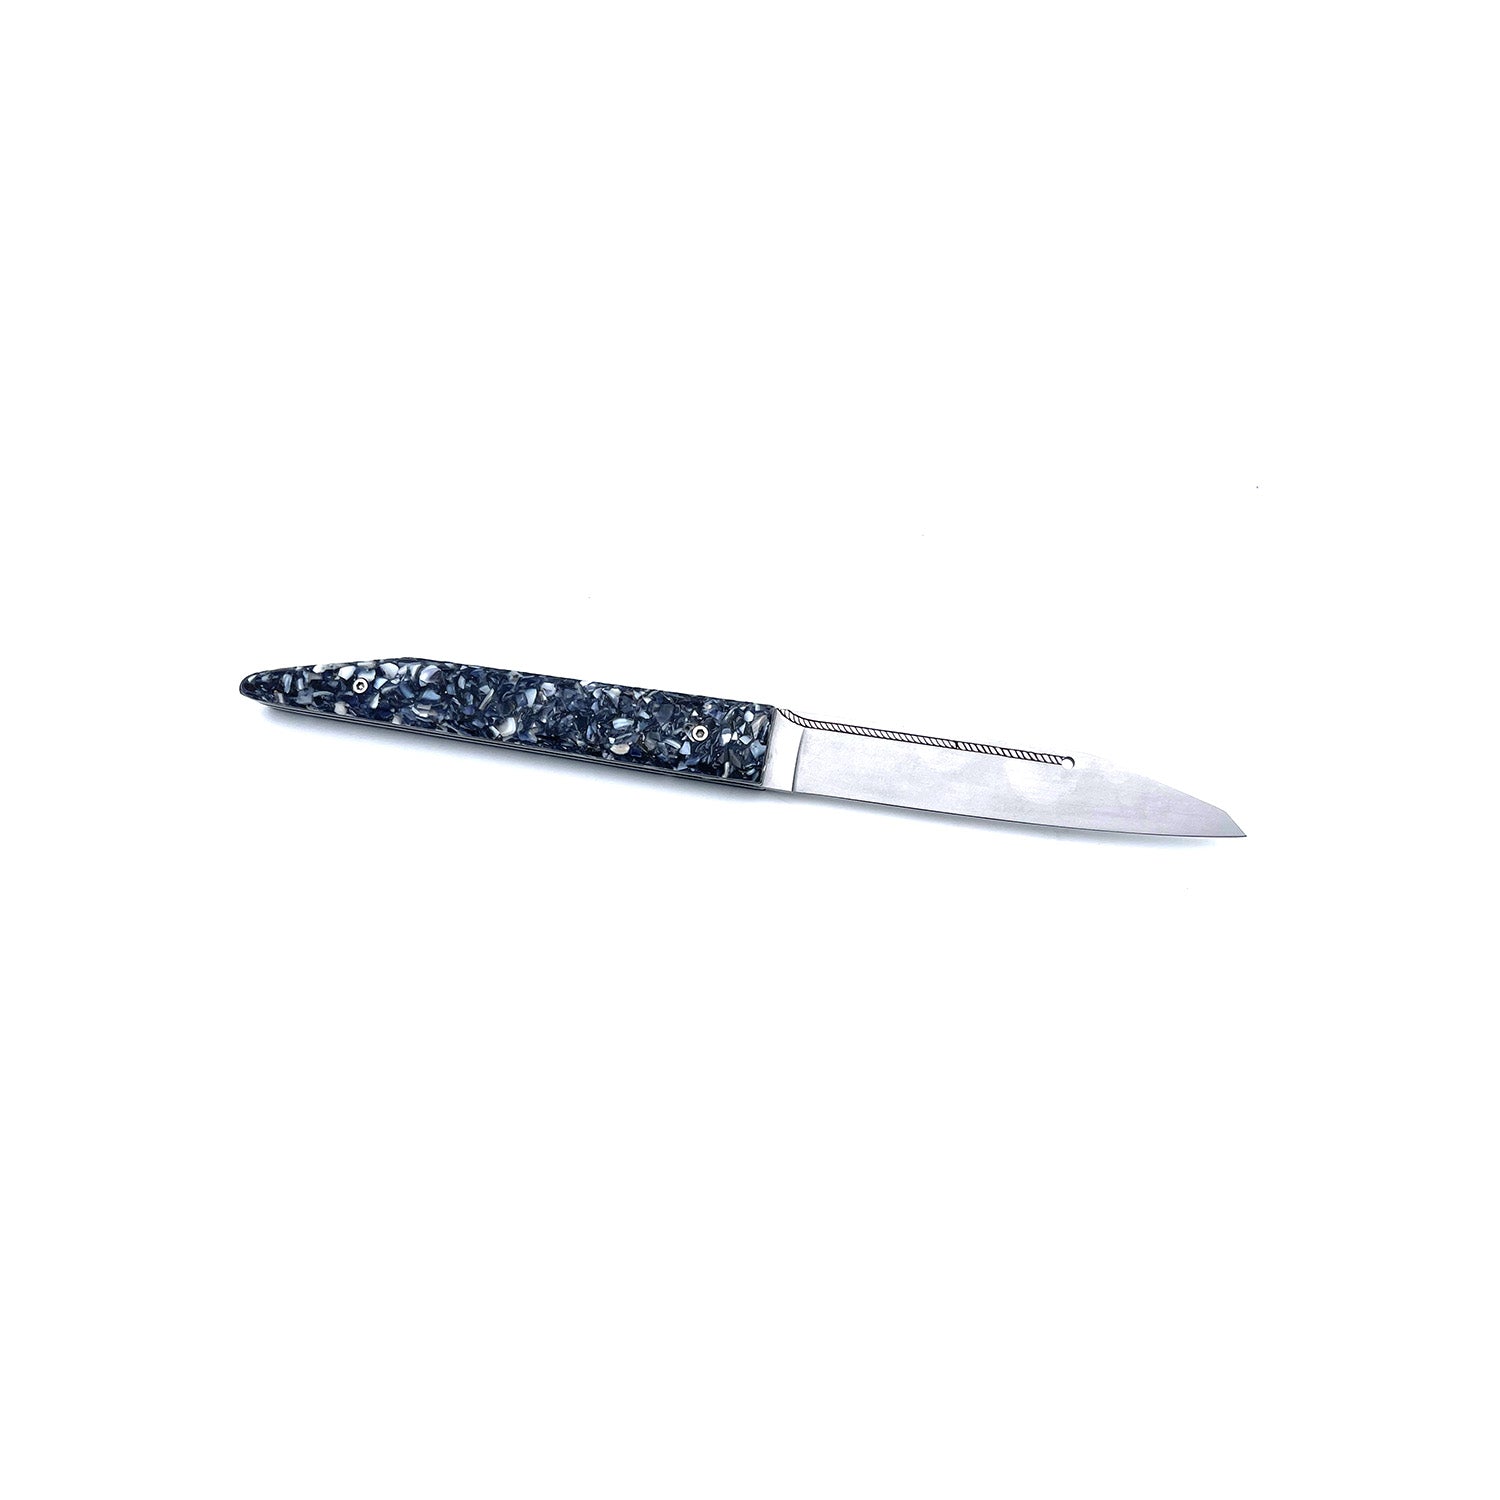 Sea knife